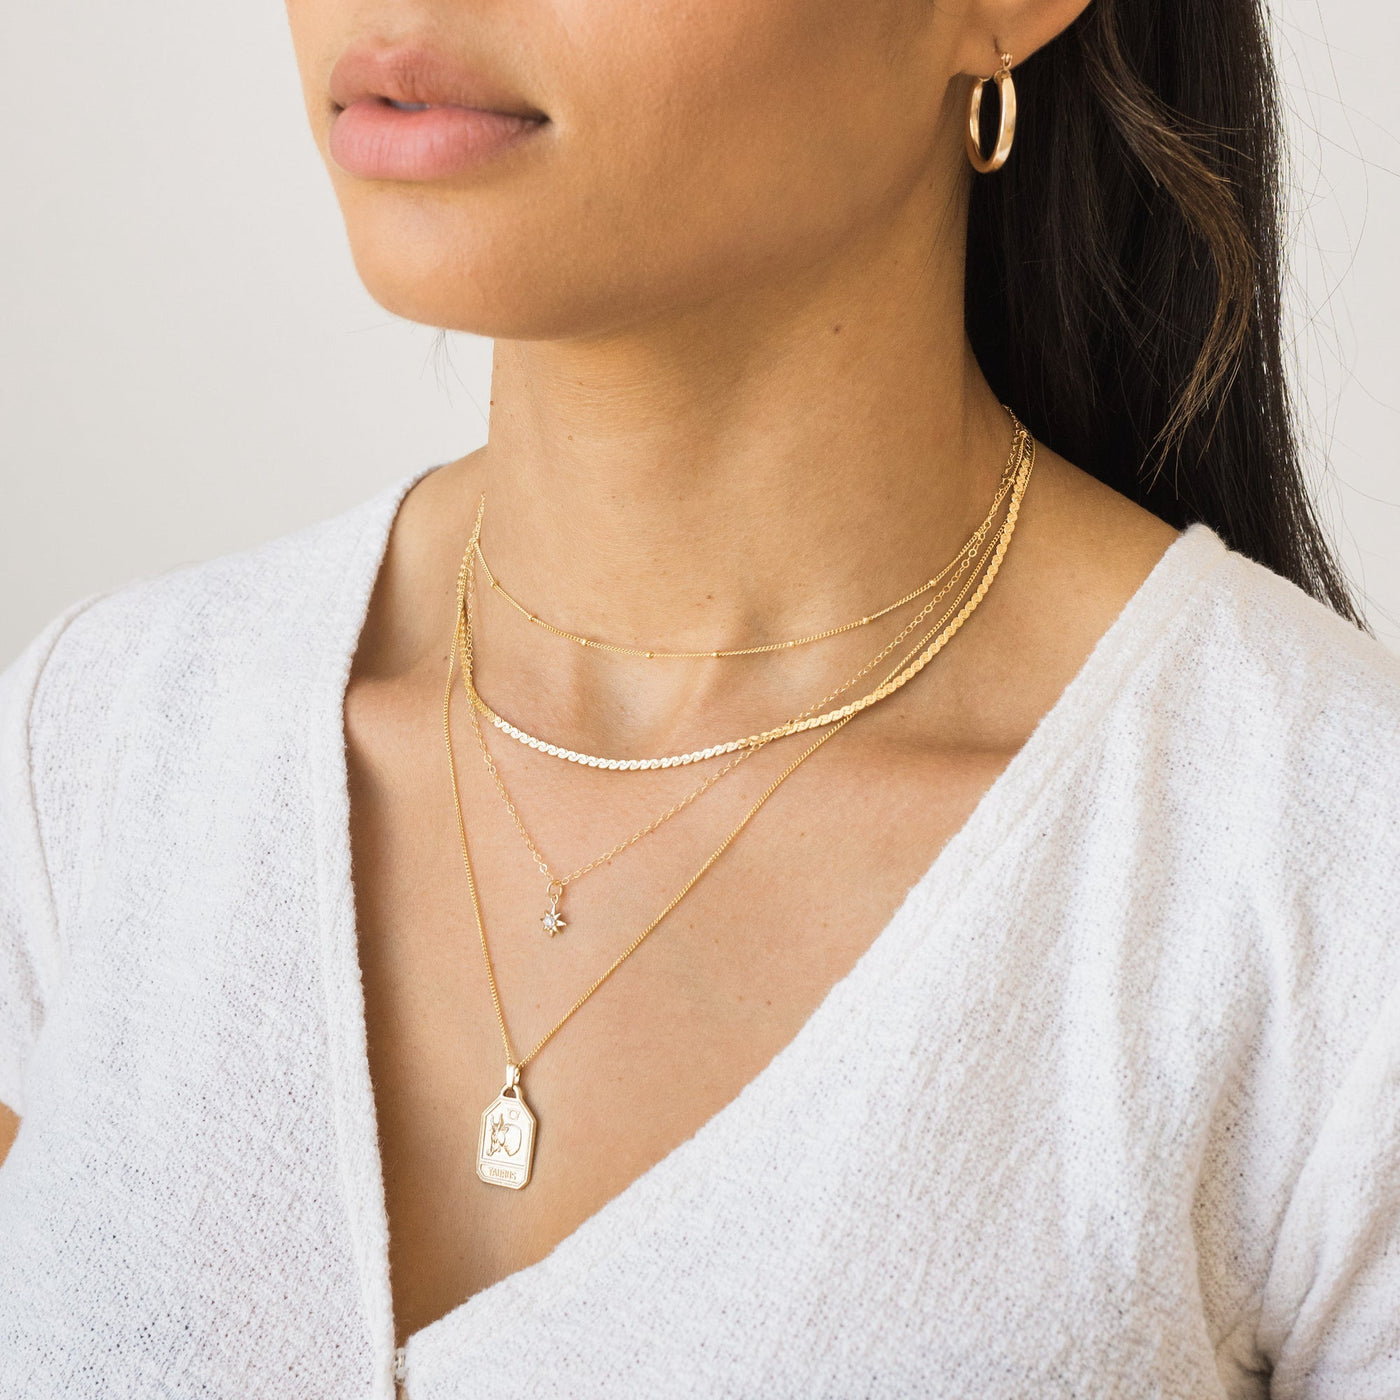 Starburst Necklace | Simple & Dainty Jewelry